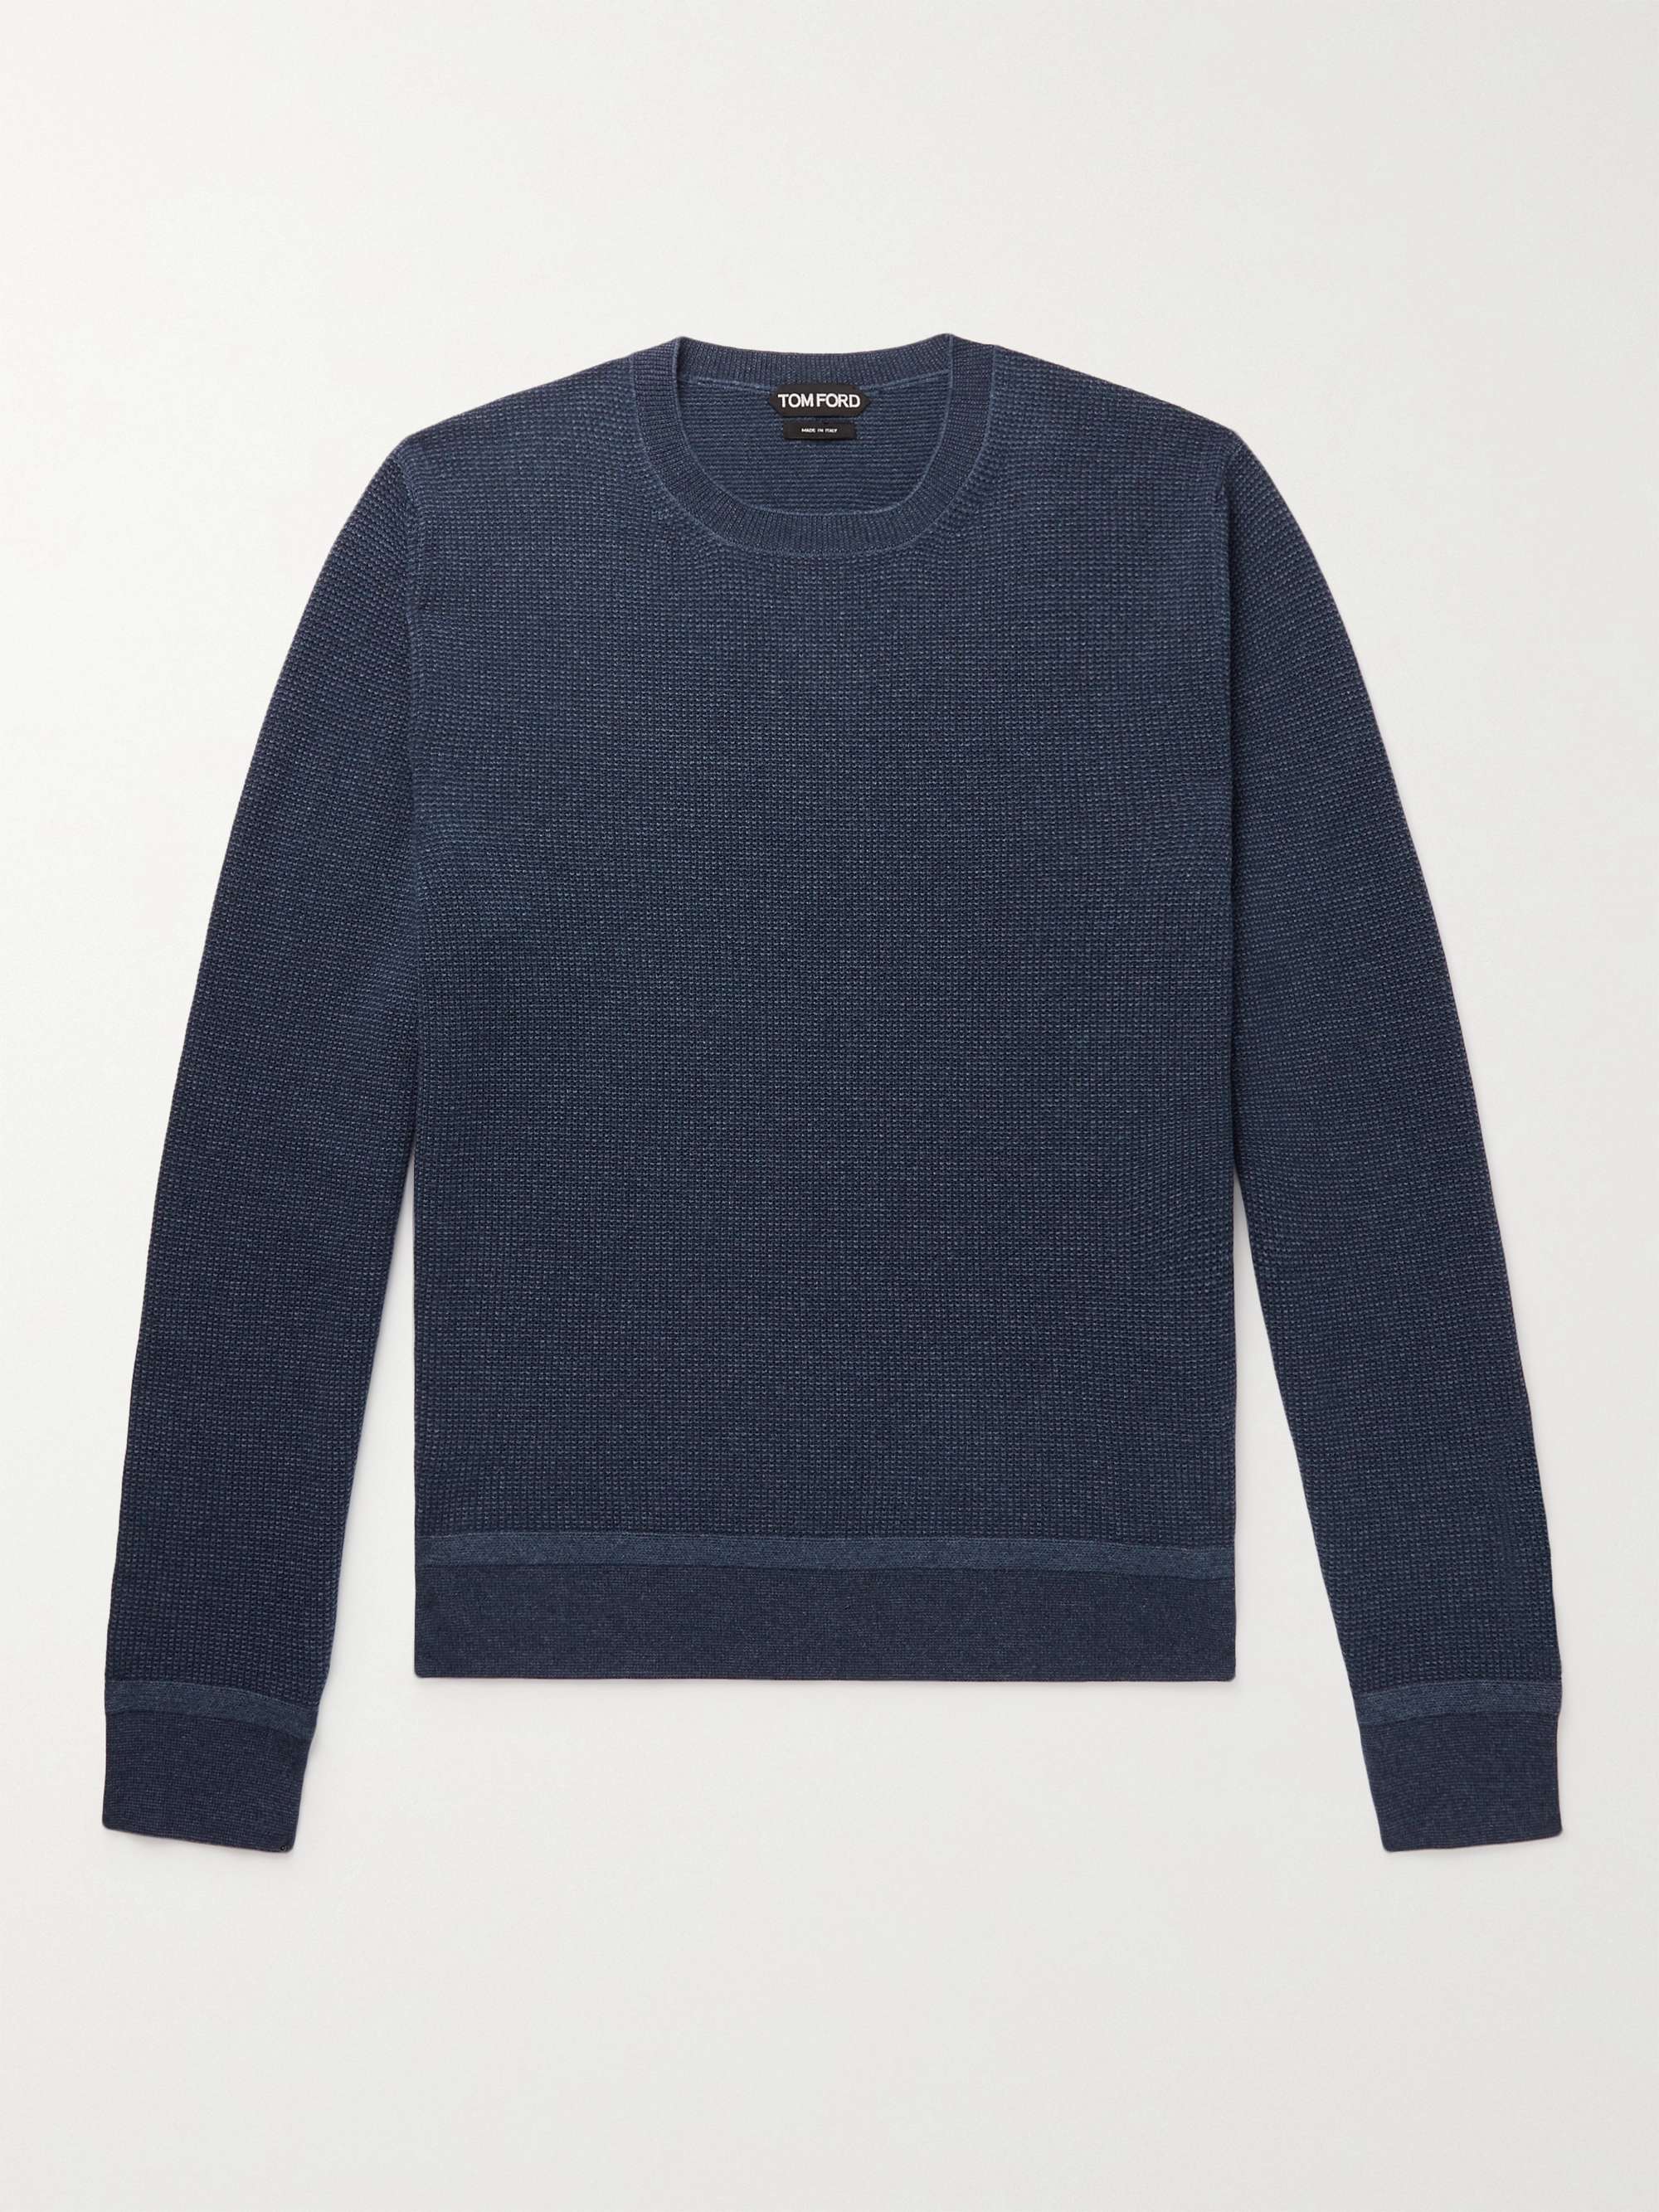 Navy Mélange Cashmere and Wool-Blend Sweater | TOM FORD | MR PORTER